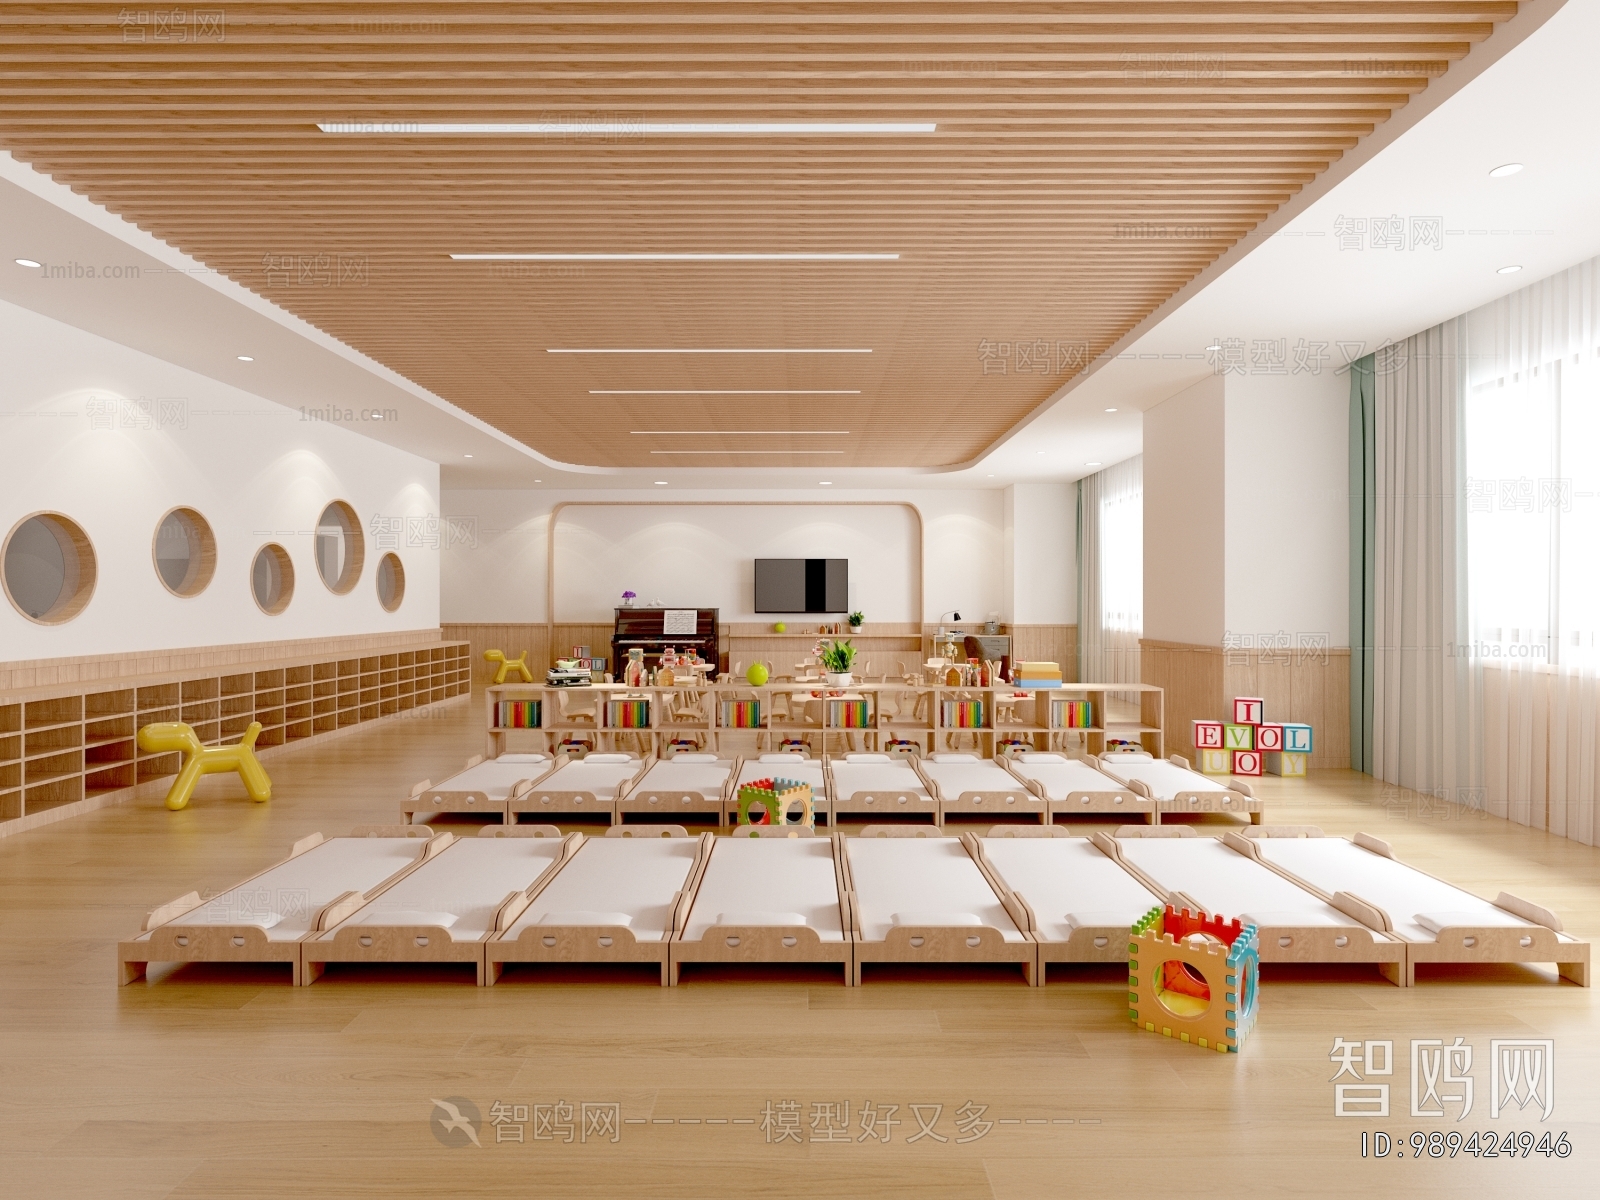 Modern Kindergarten Dormitory